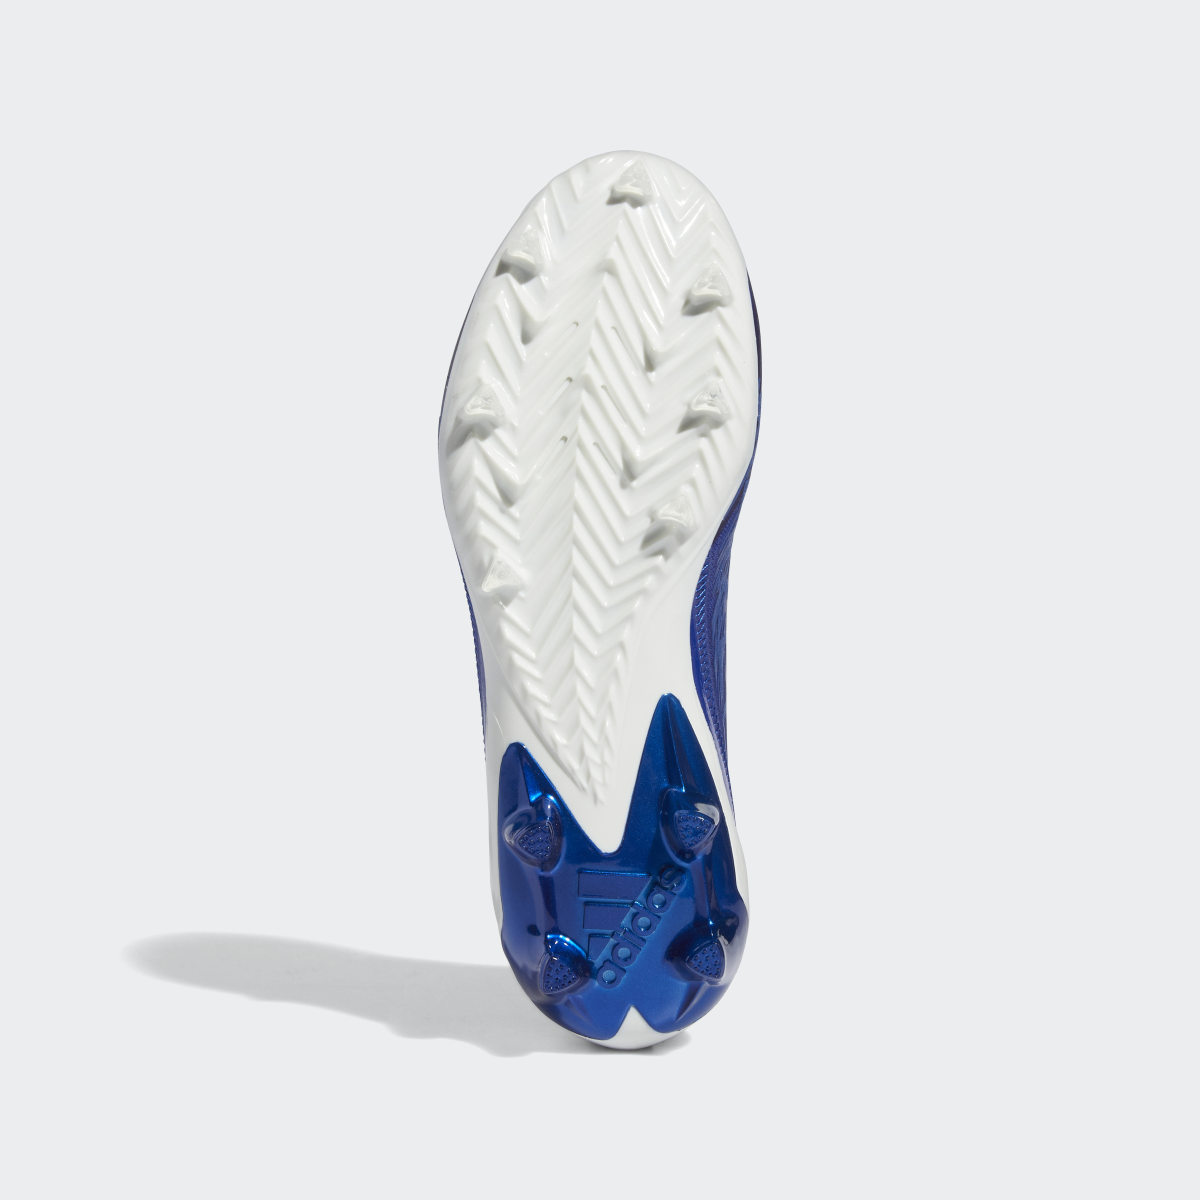 Adidas Adizero Cleats. 4